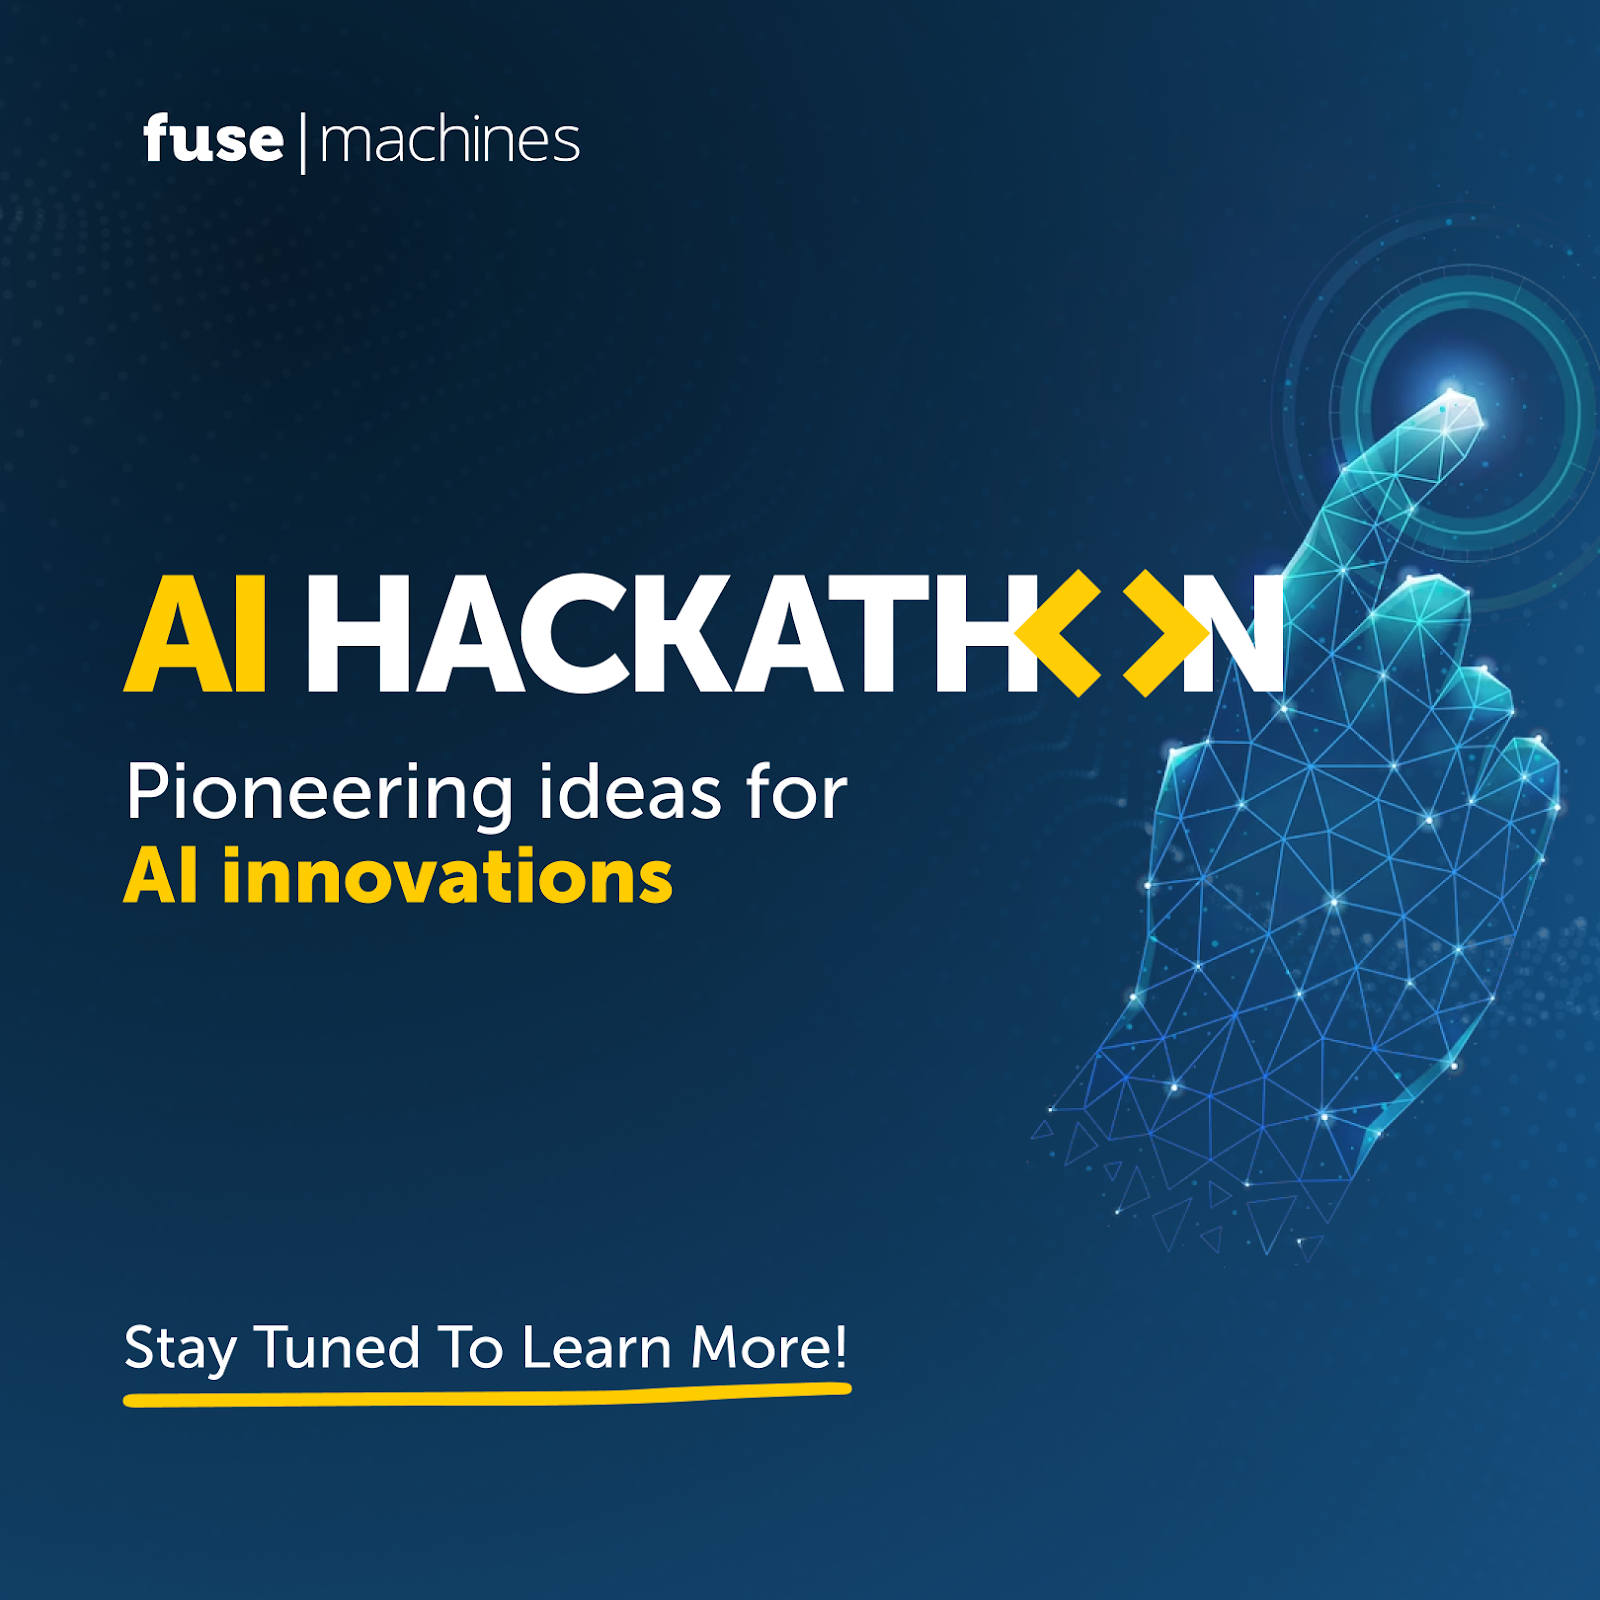 Fusemachines AI Hackathon 23